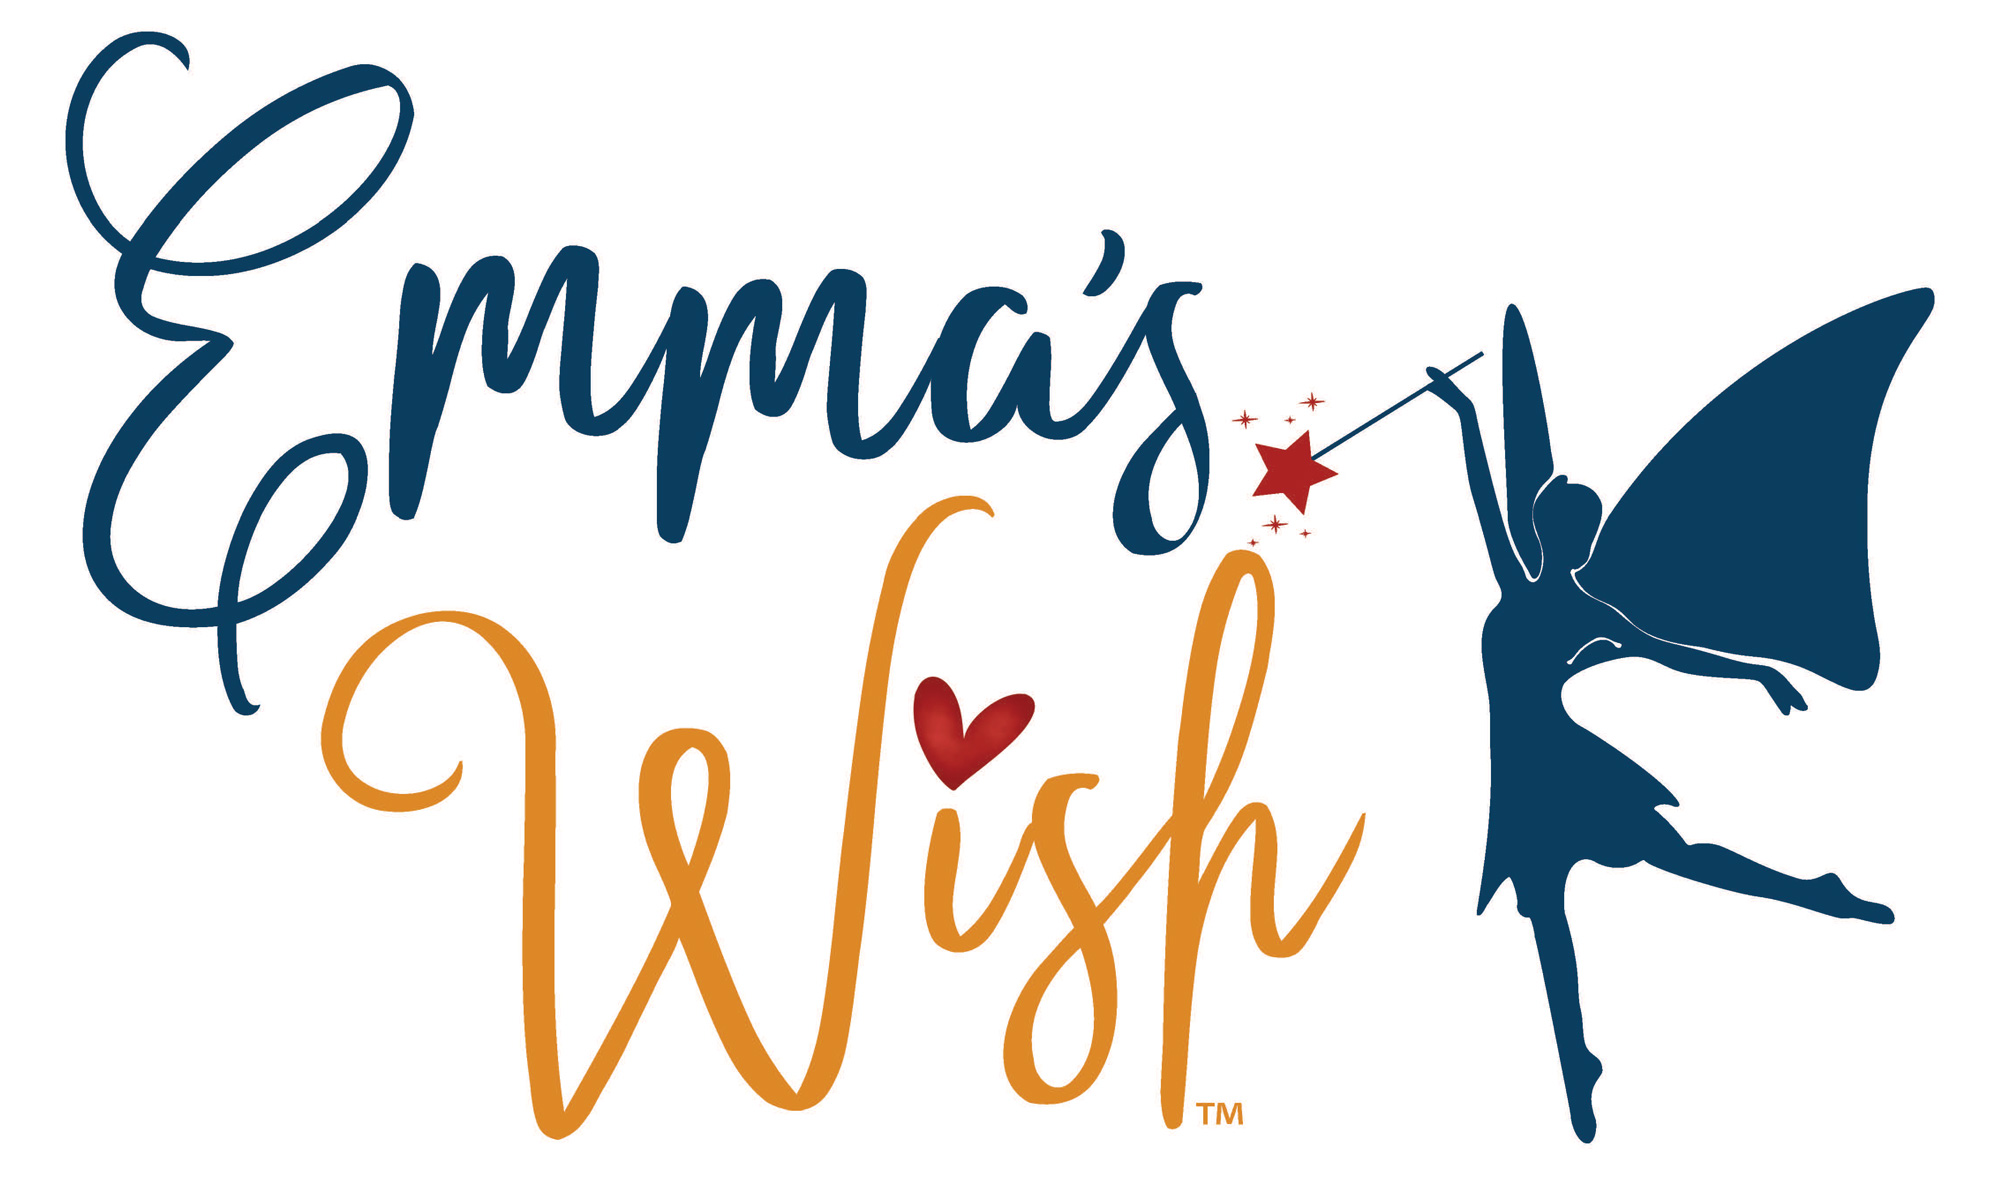 Emma's Wish logo